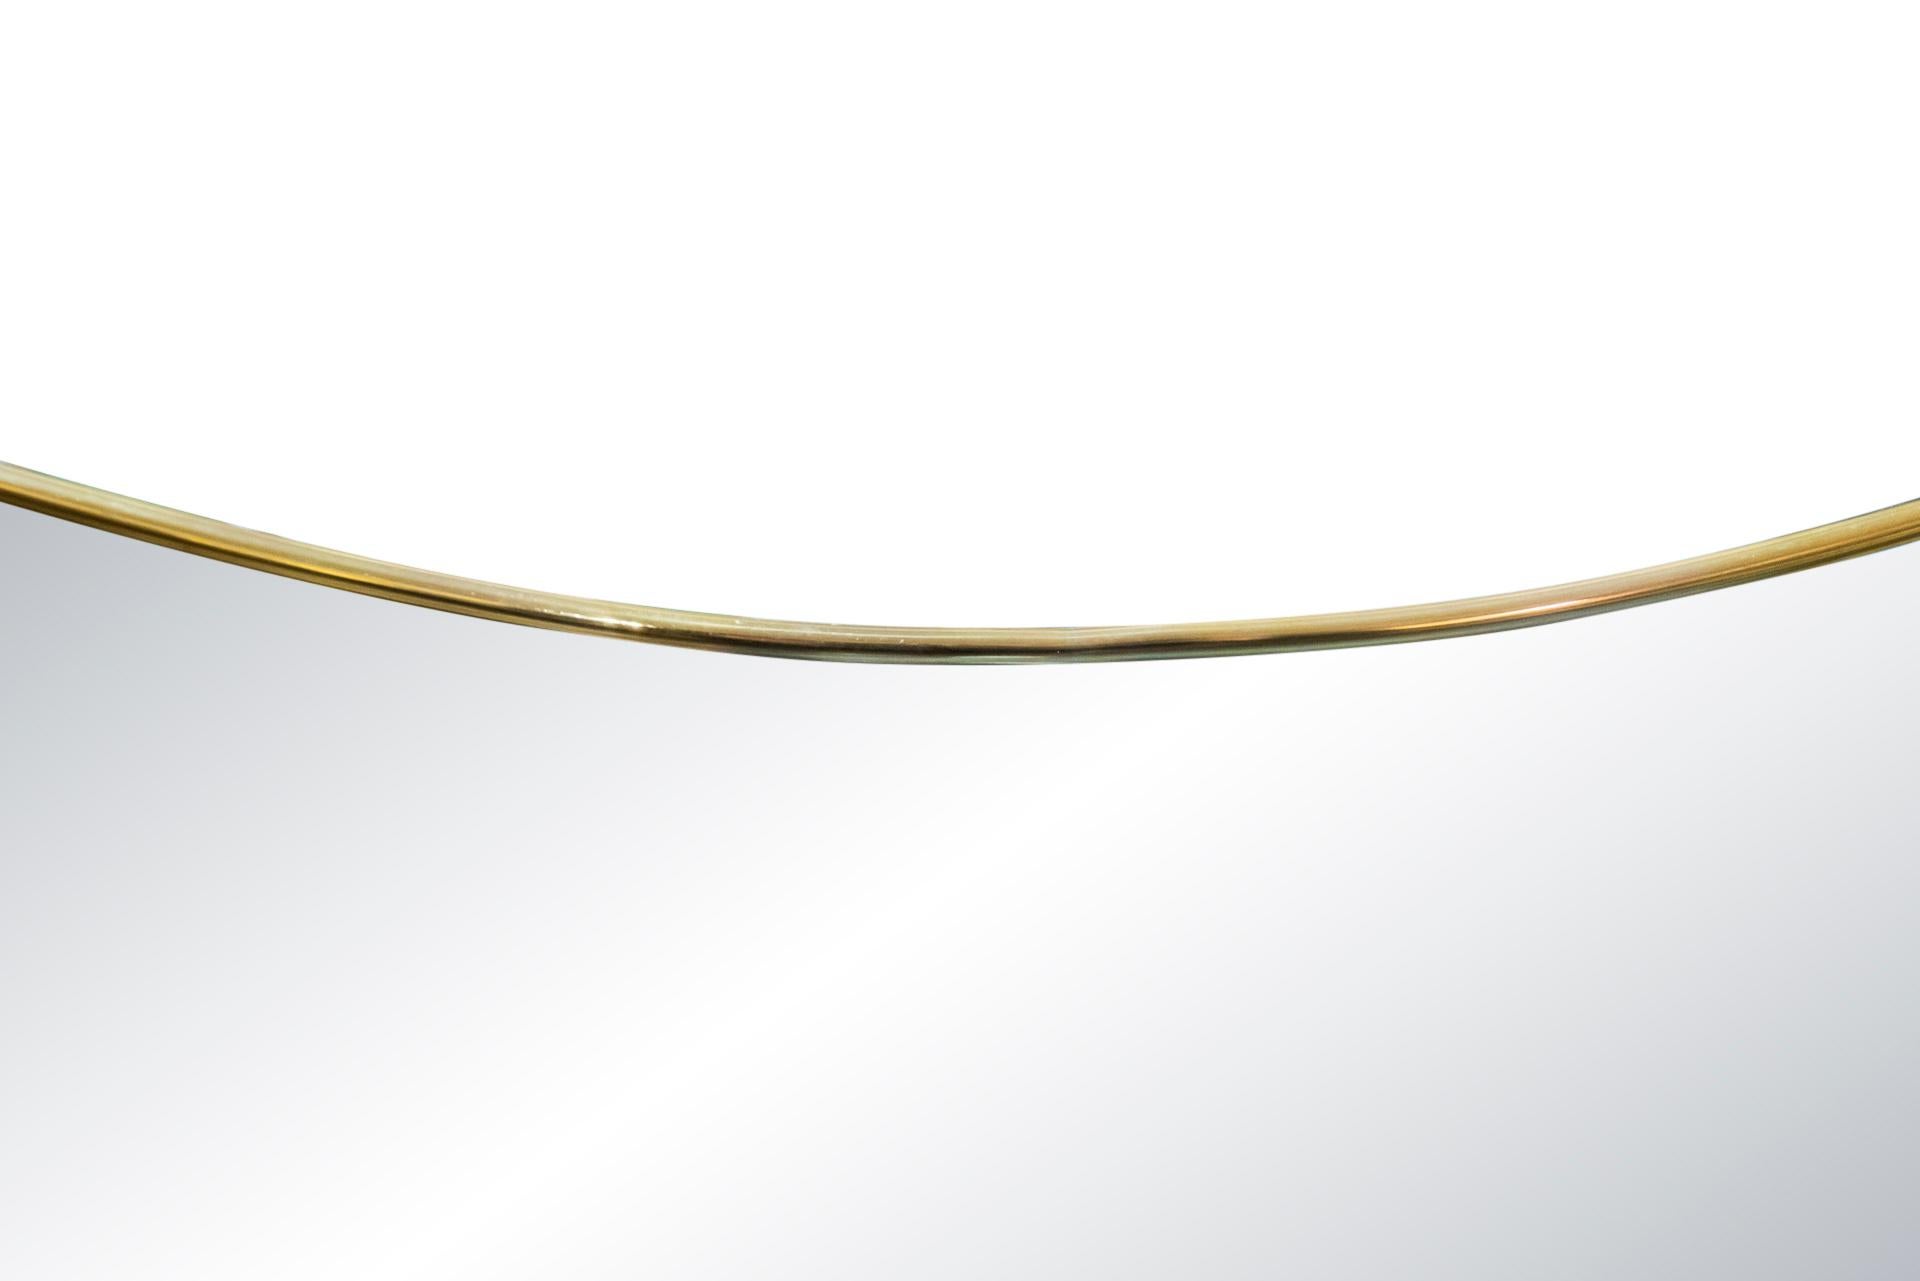 In the style of Gio Ponti, 
Mirror, gilt brass,
Italy, circa 2000.

Measures: Height 150 cm, width 69 cm, depth 3 cm.